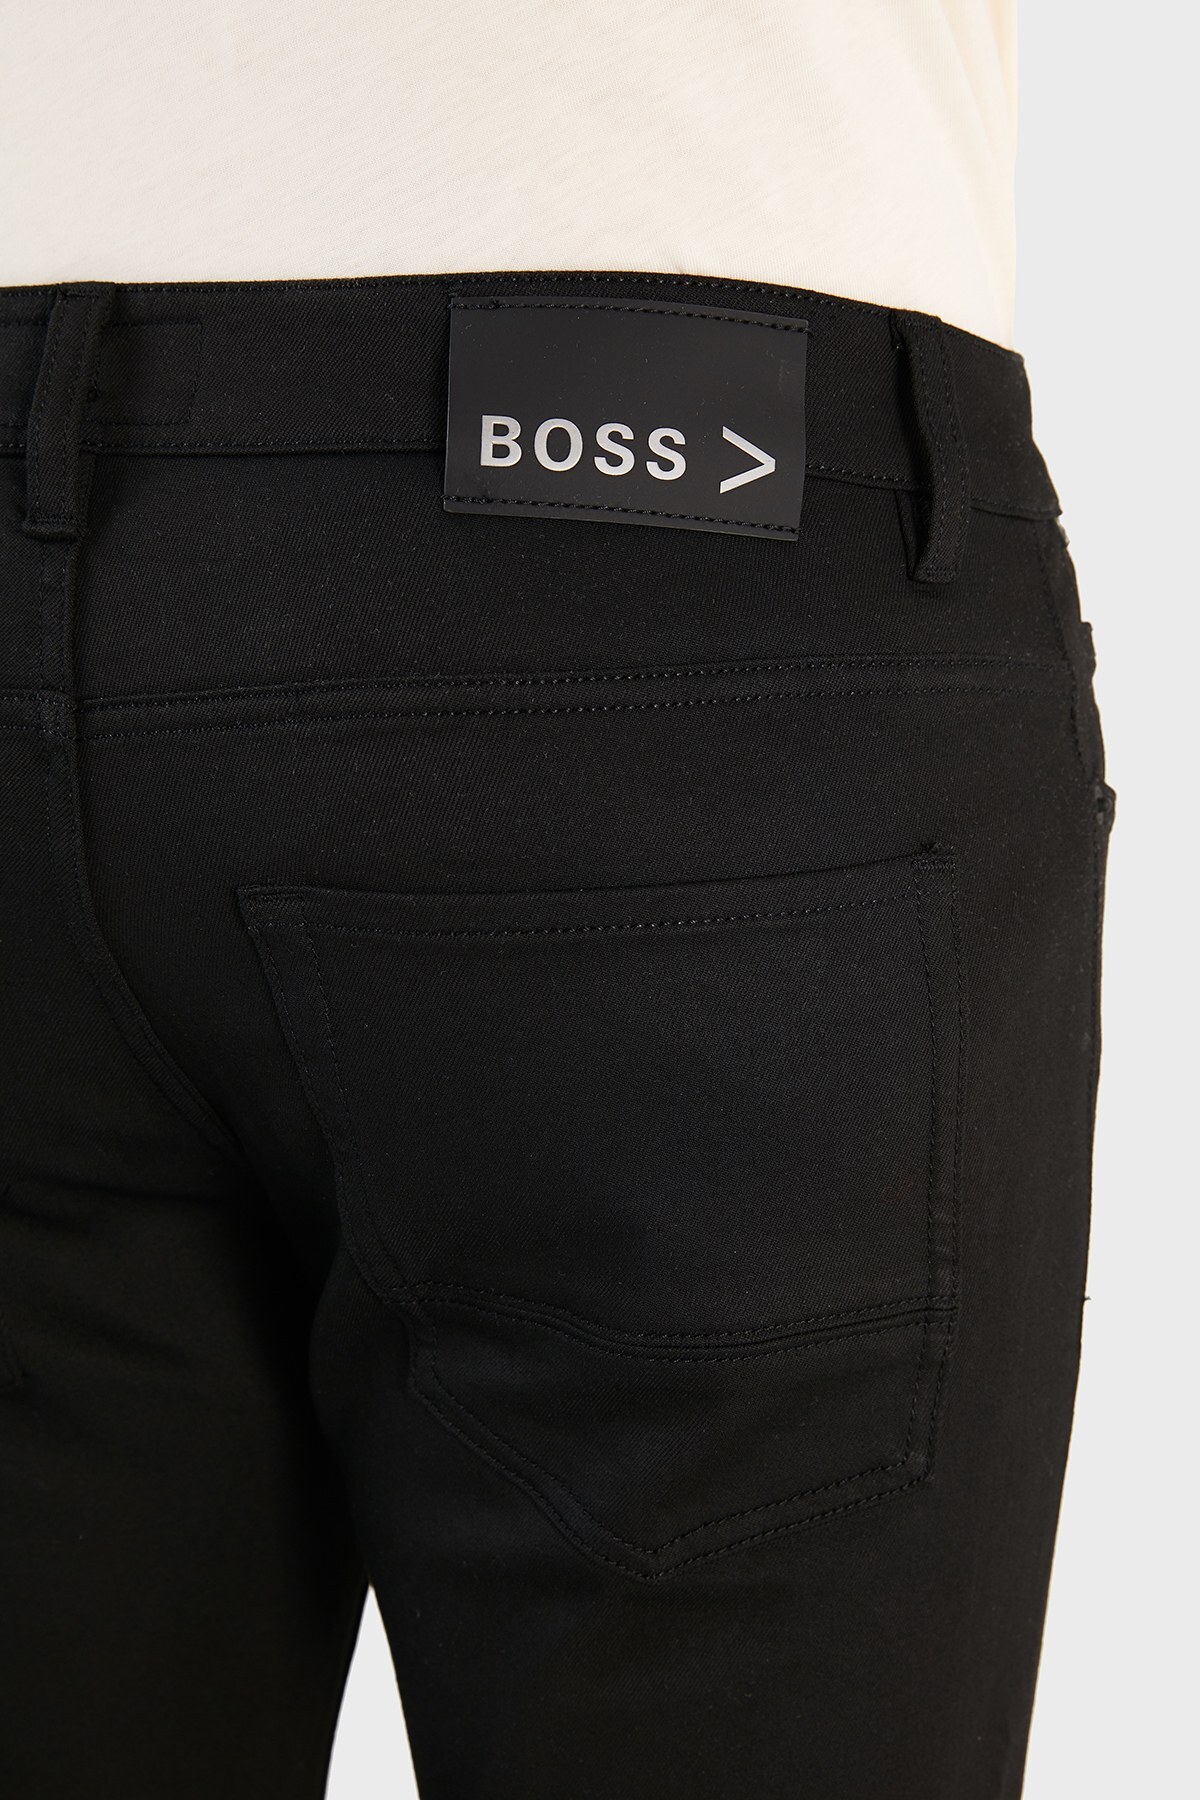 Hugo Boss Cepli Slim Fit Jeans Erkek Kot Pantolon 50458188 001 SİYAH